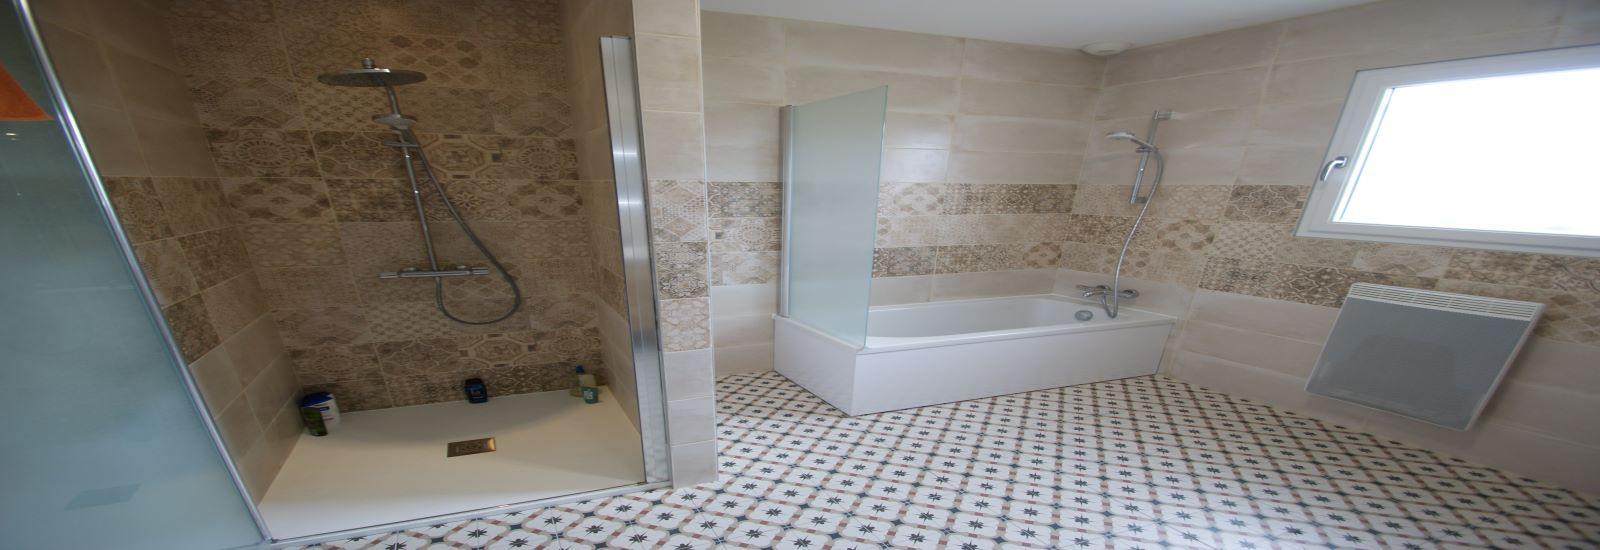 accueil - Sylvain LARUELLE salle de bains Angoulême Rénovation installation